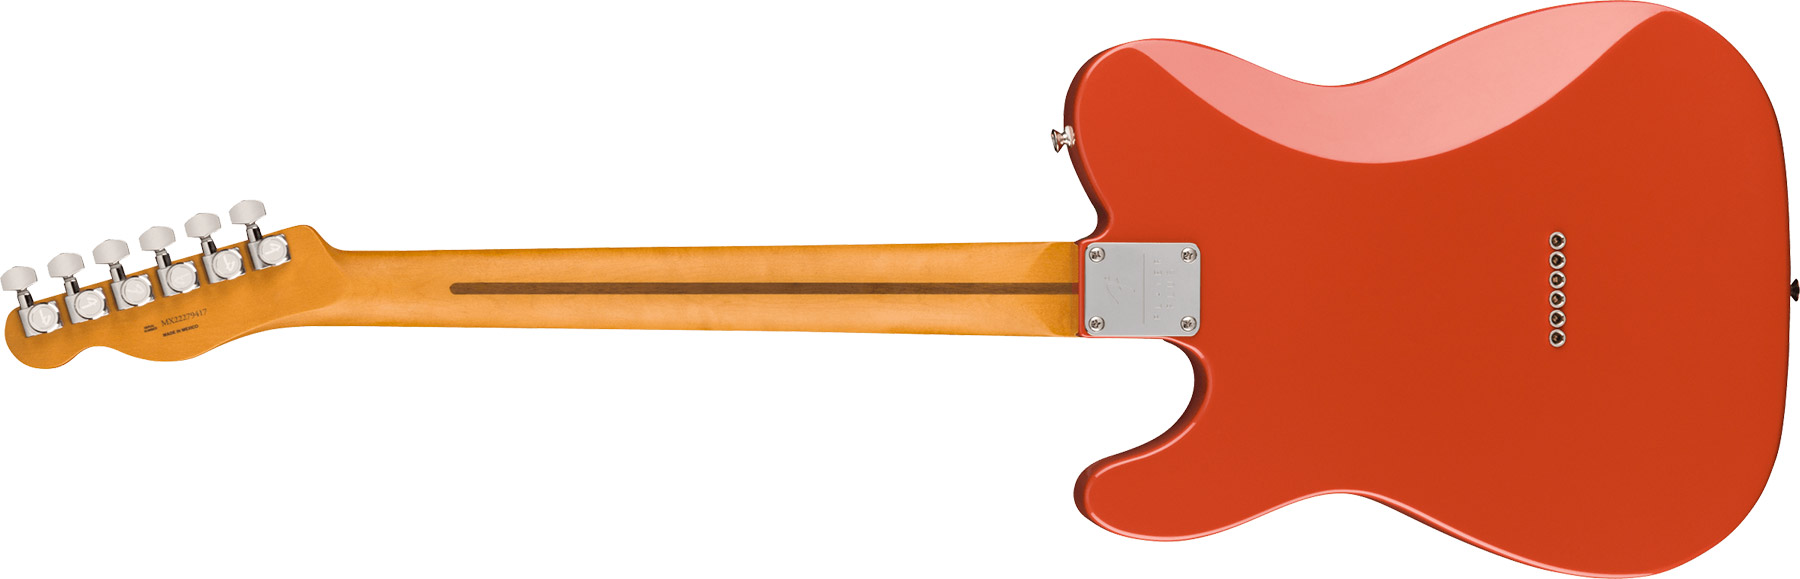 Fender Tele Player Plus Mex 2023 2s Ht Pf - Fiesta Red - Guitarra eléctrica con forma de tel - Variation 1